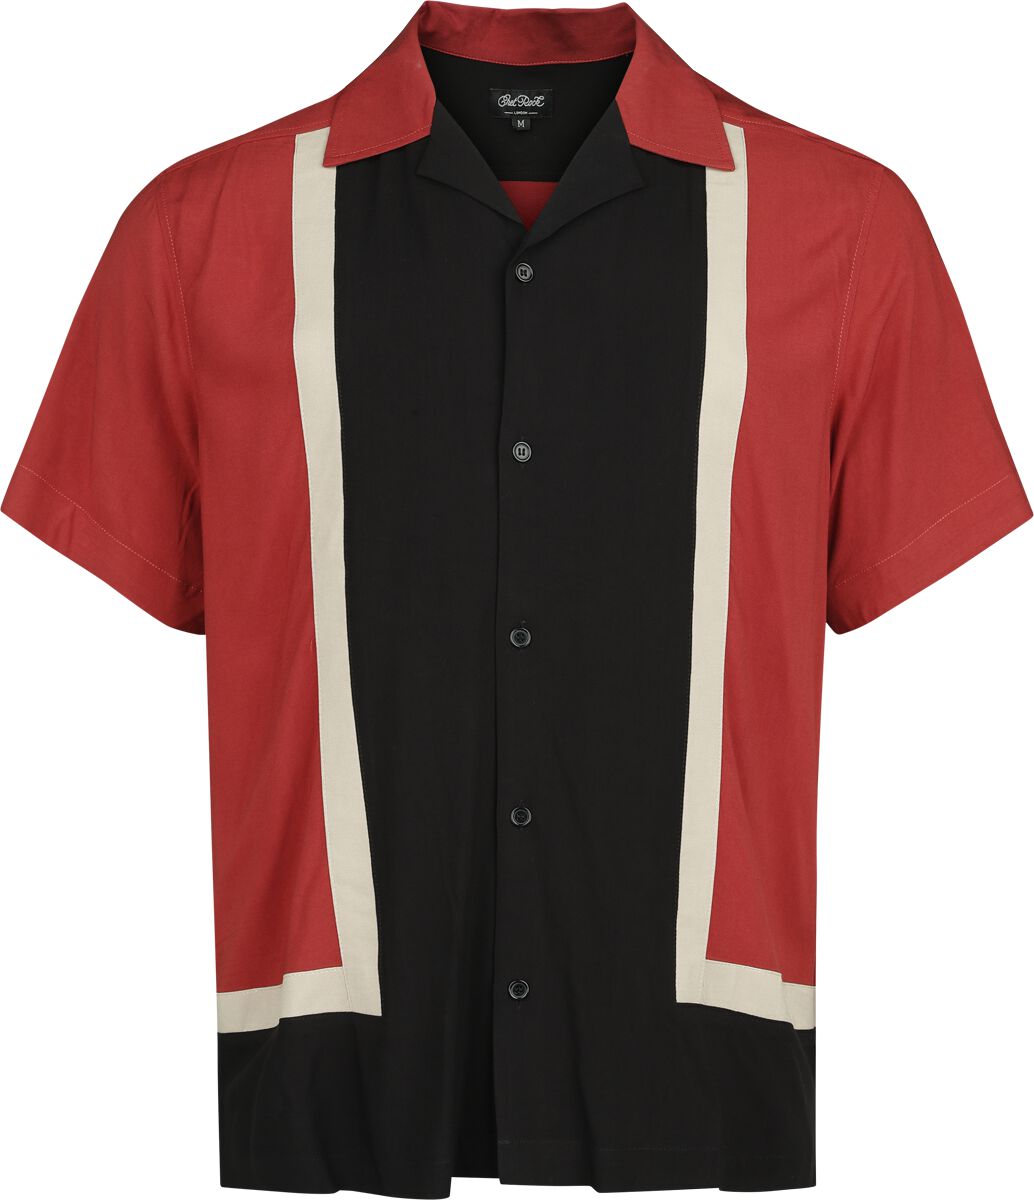 Chet Rock - Rockabilly Kurzarmhemd - Walter Bowling Shirt - S bis XL - für Männer - Größe S - rot/schwarz